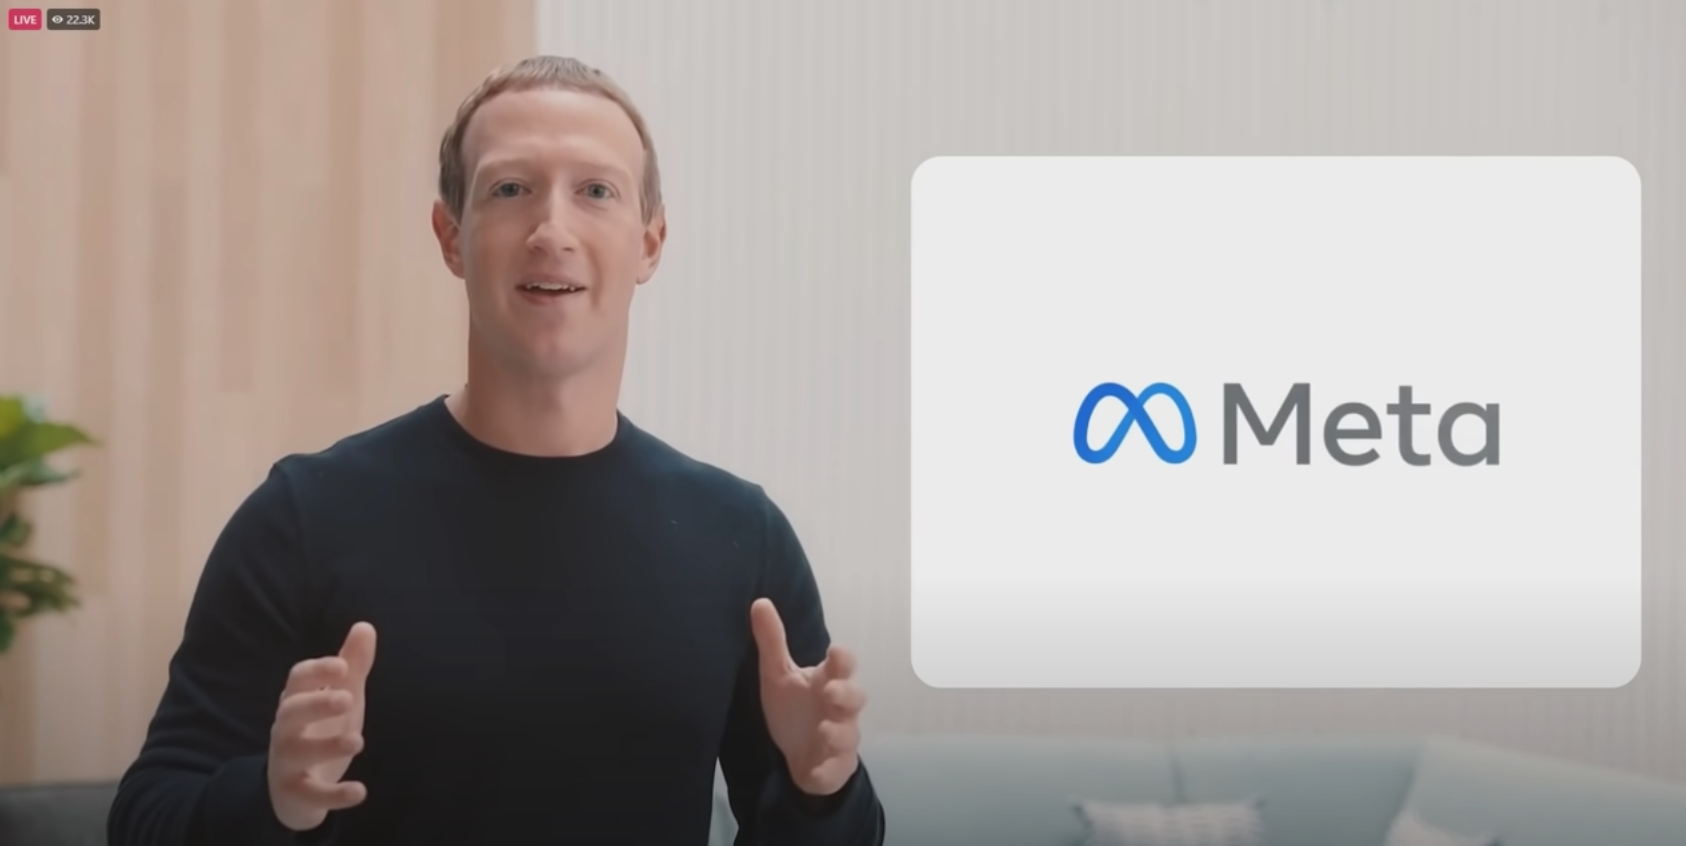 Mark Zuckerberg revealing Meta at Facebook Connect